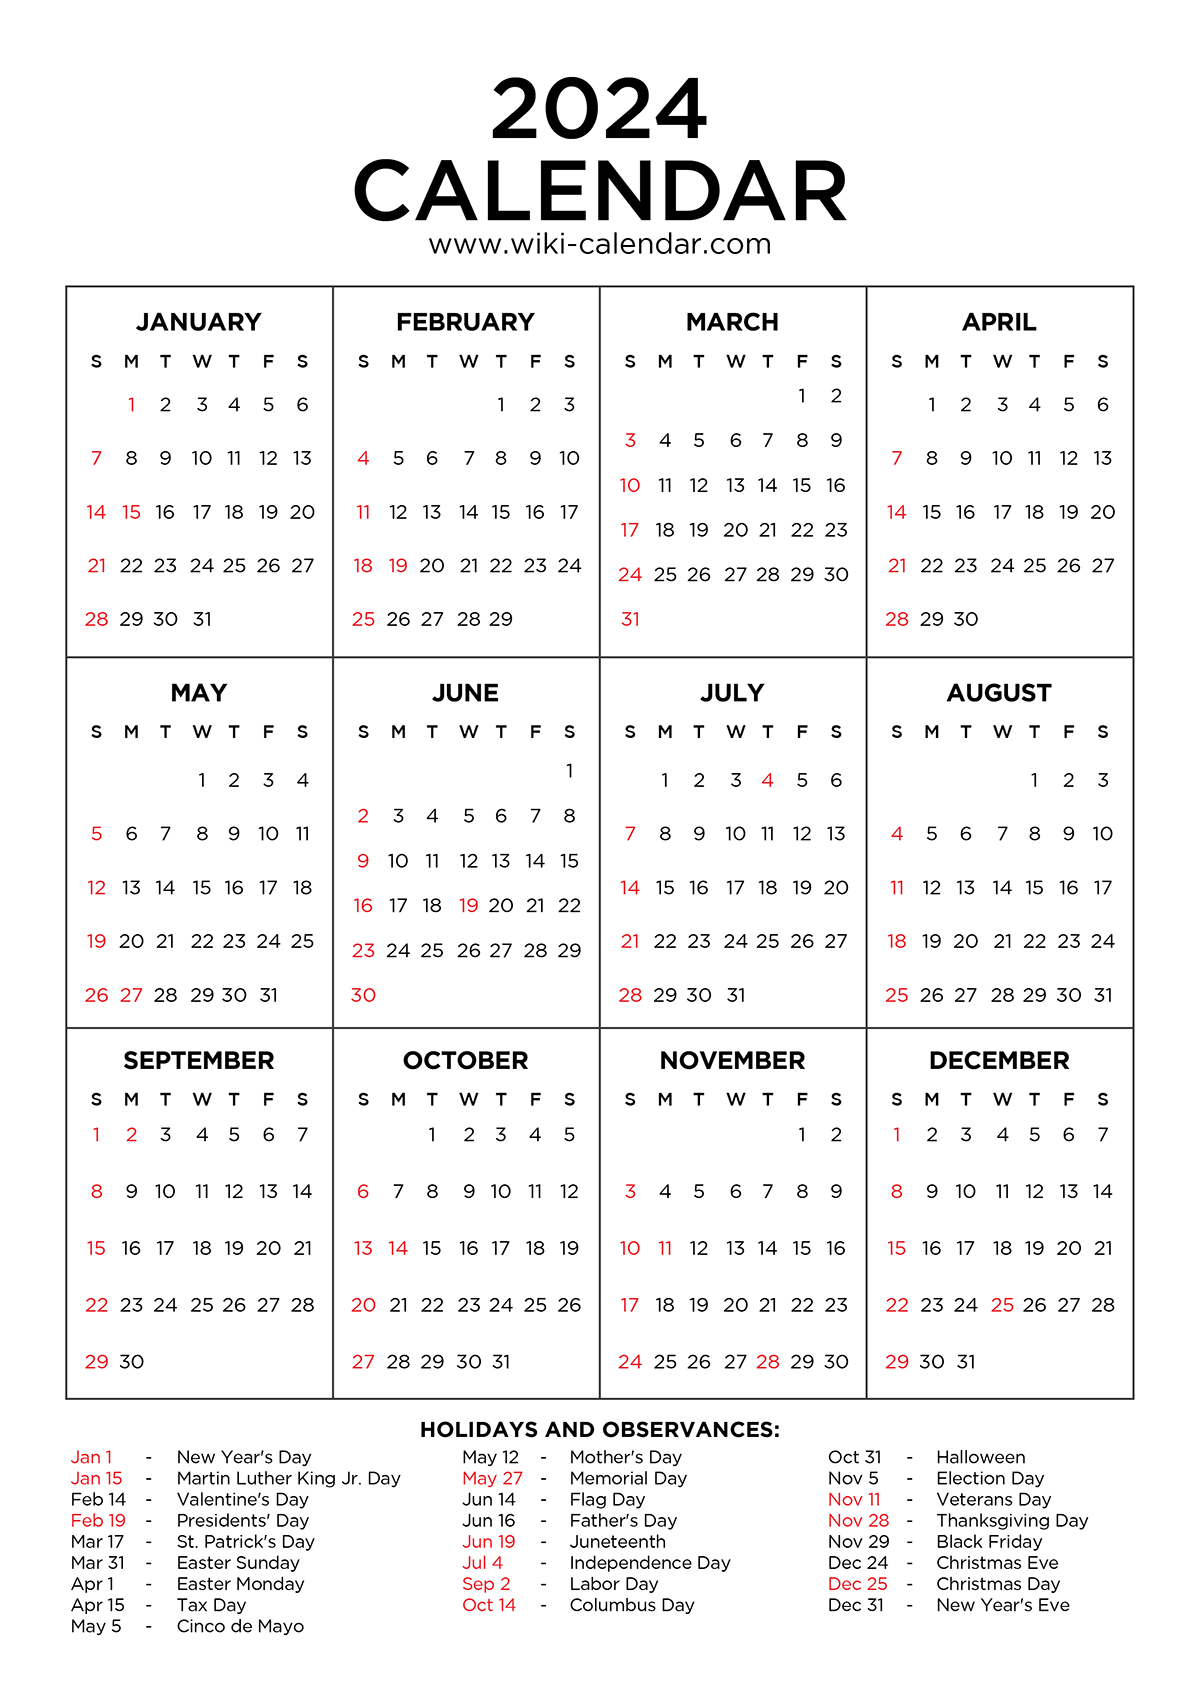 Year 2024 Calendar Printable With Holidays - Wiki Calendar regarding Free Printable Calendar 2024 8 1 2 X 11